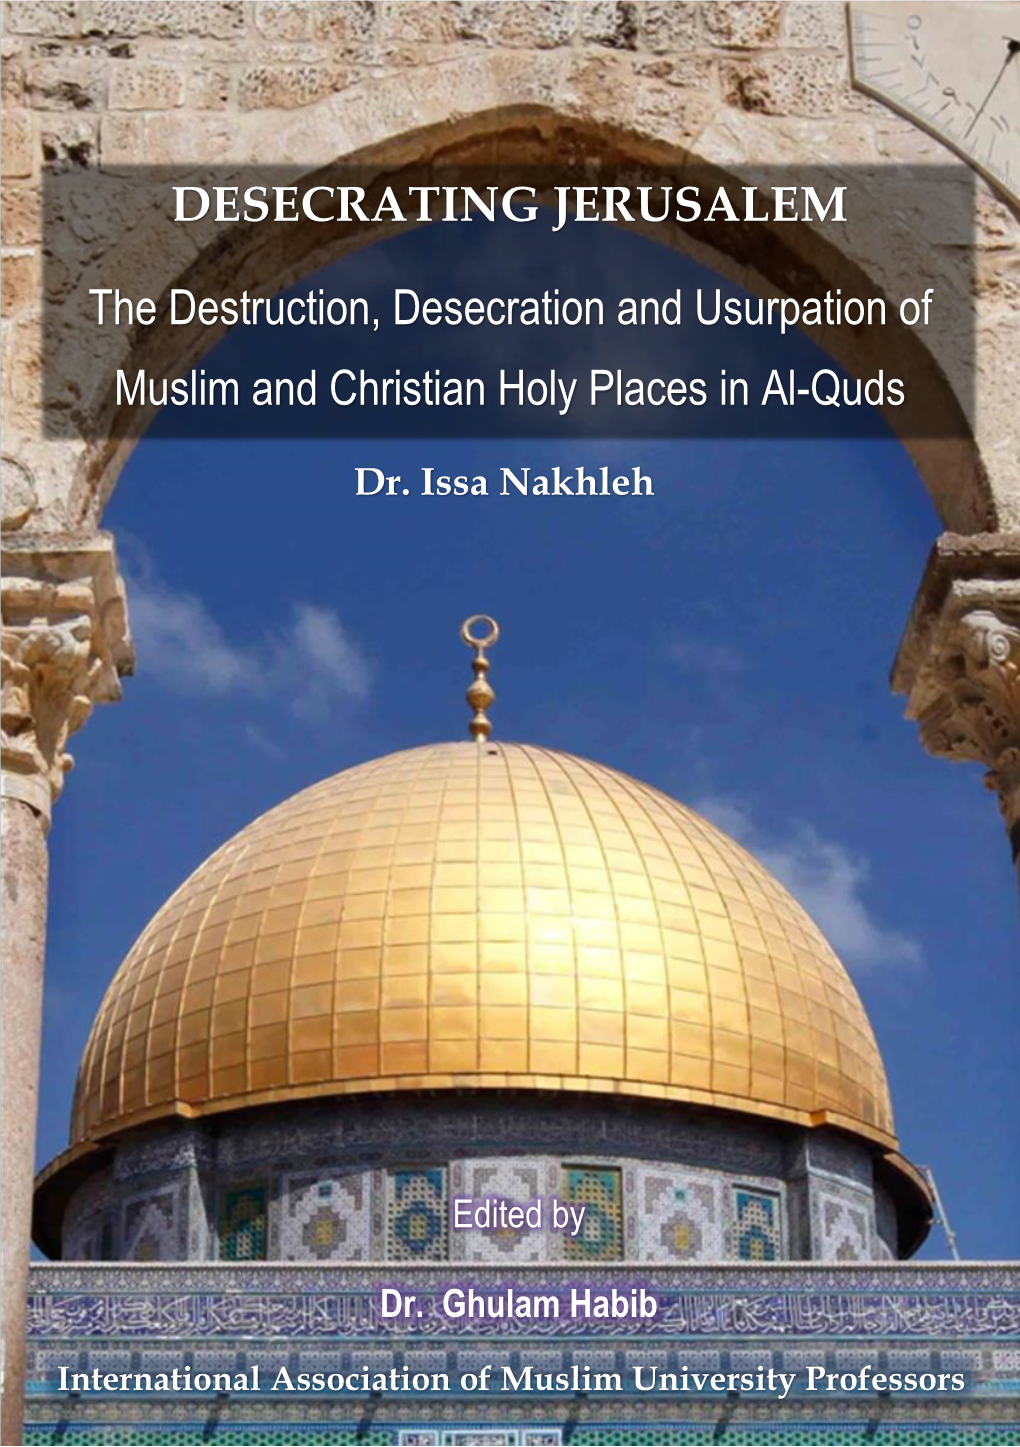 Edited by Dr. Ghulam Habib Dr. Issa Nakhleh